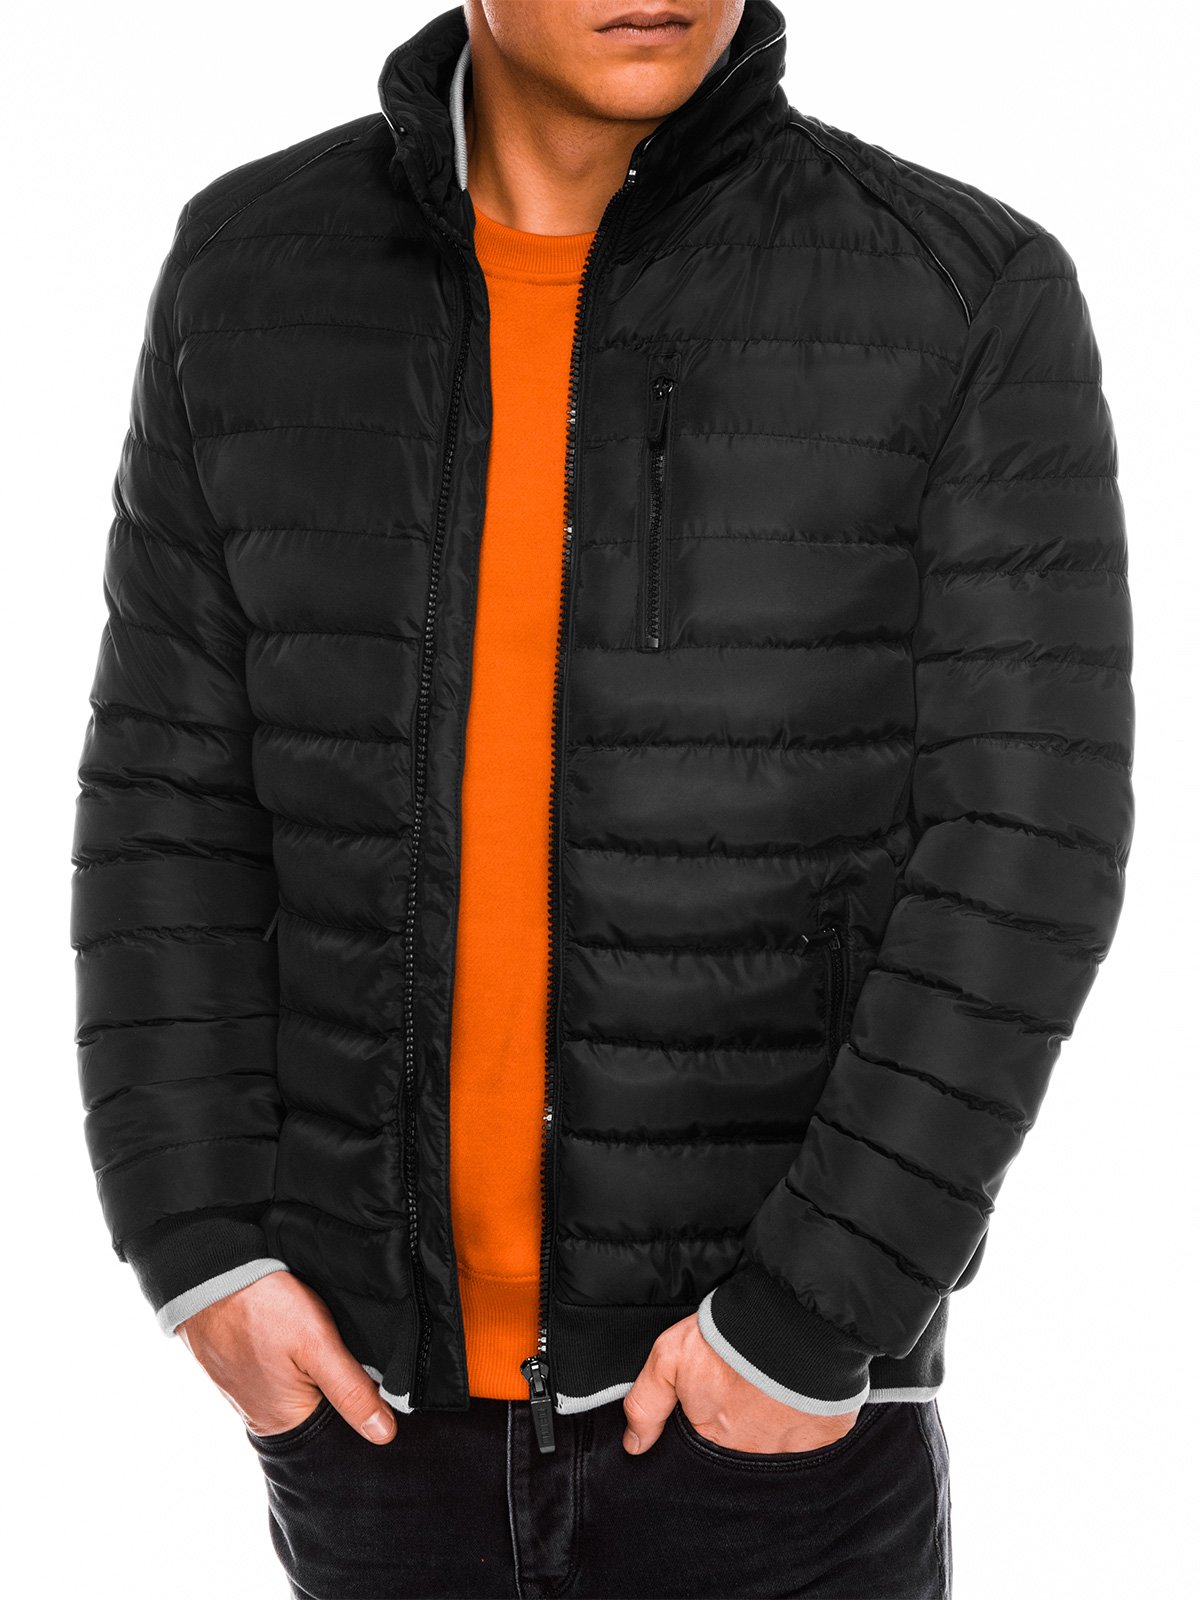 Men's winter jacket C422 - black | MODONE wholesale - Clothing For Men